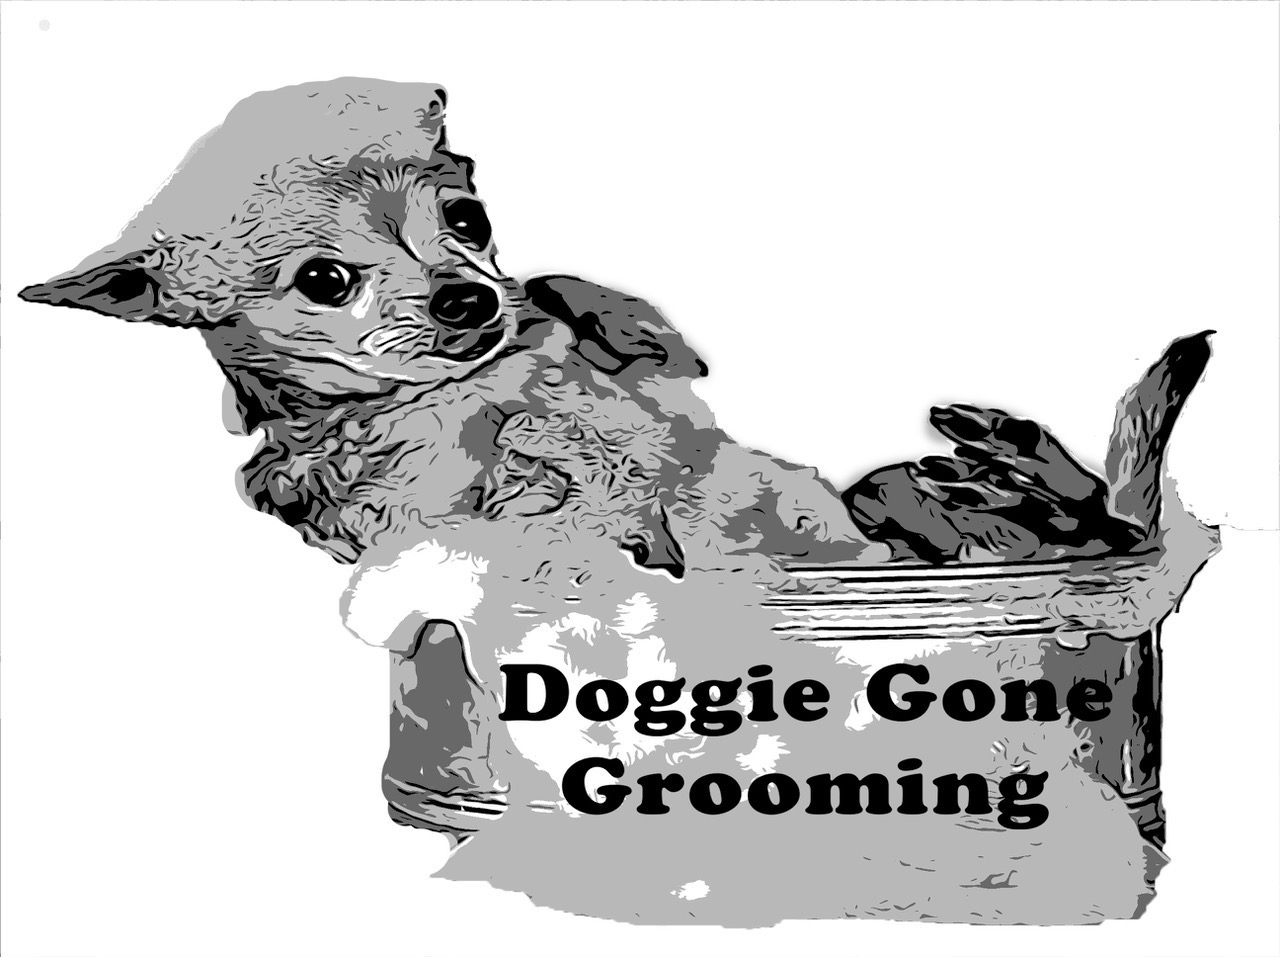 Doggie gone grooming